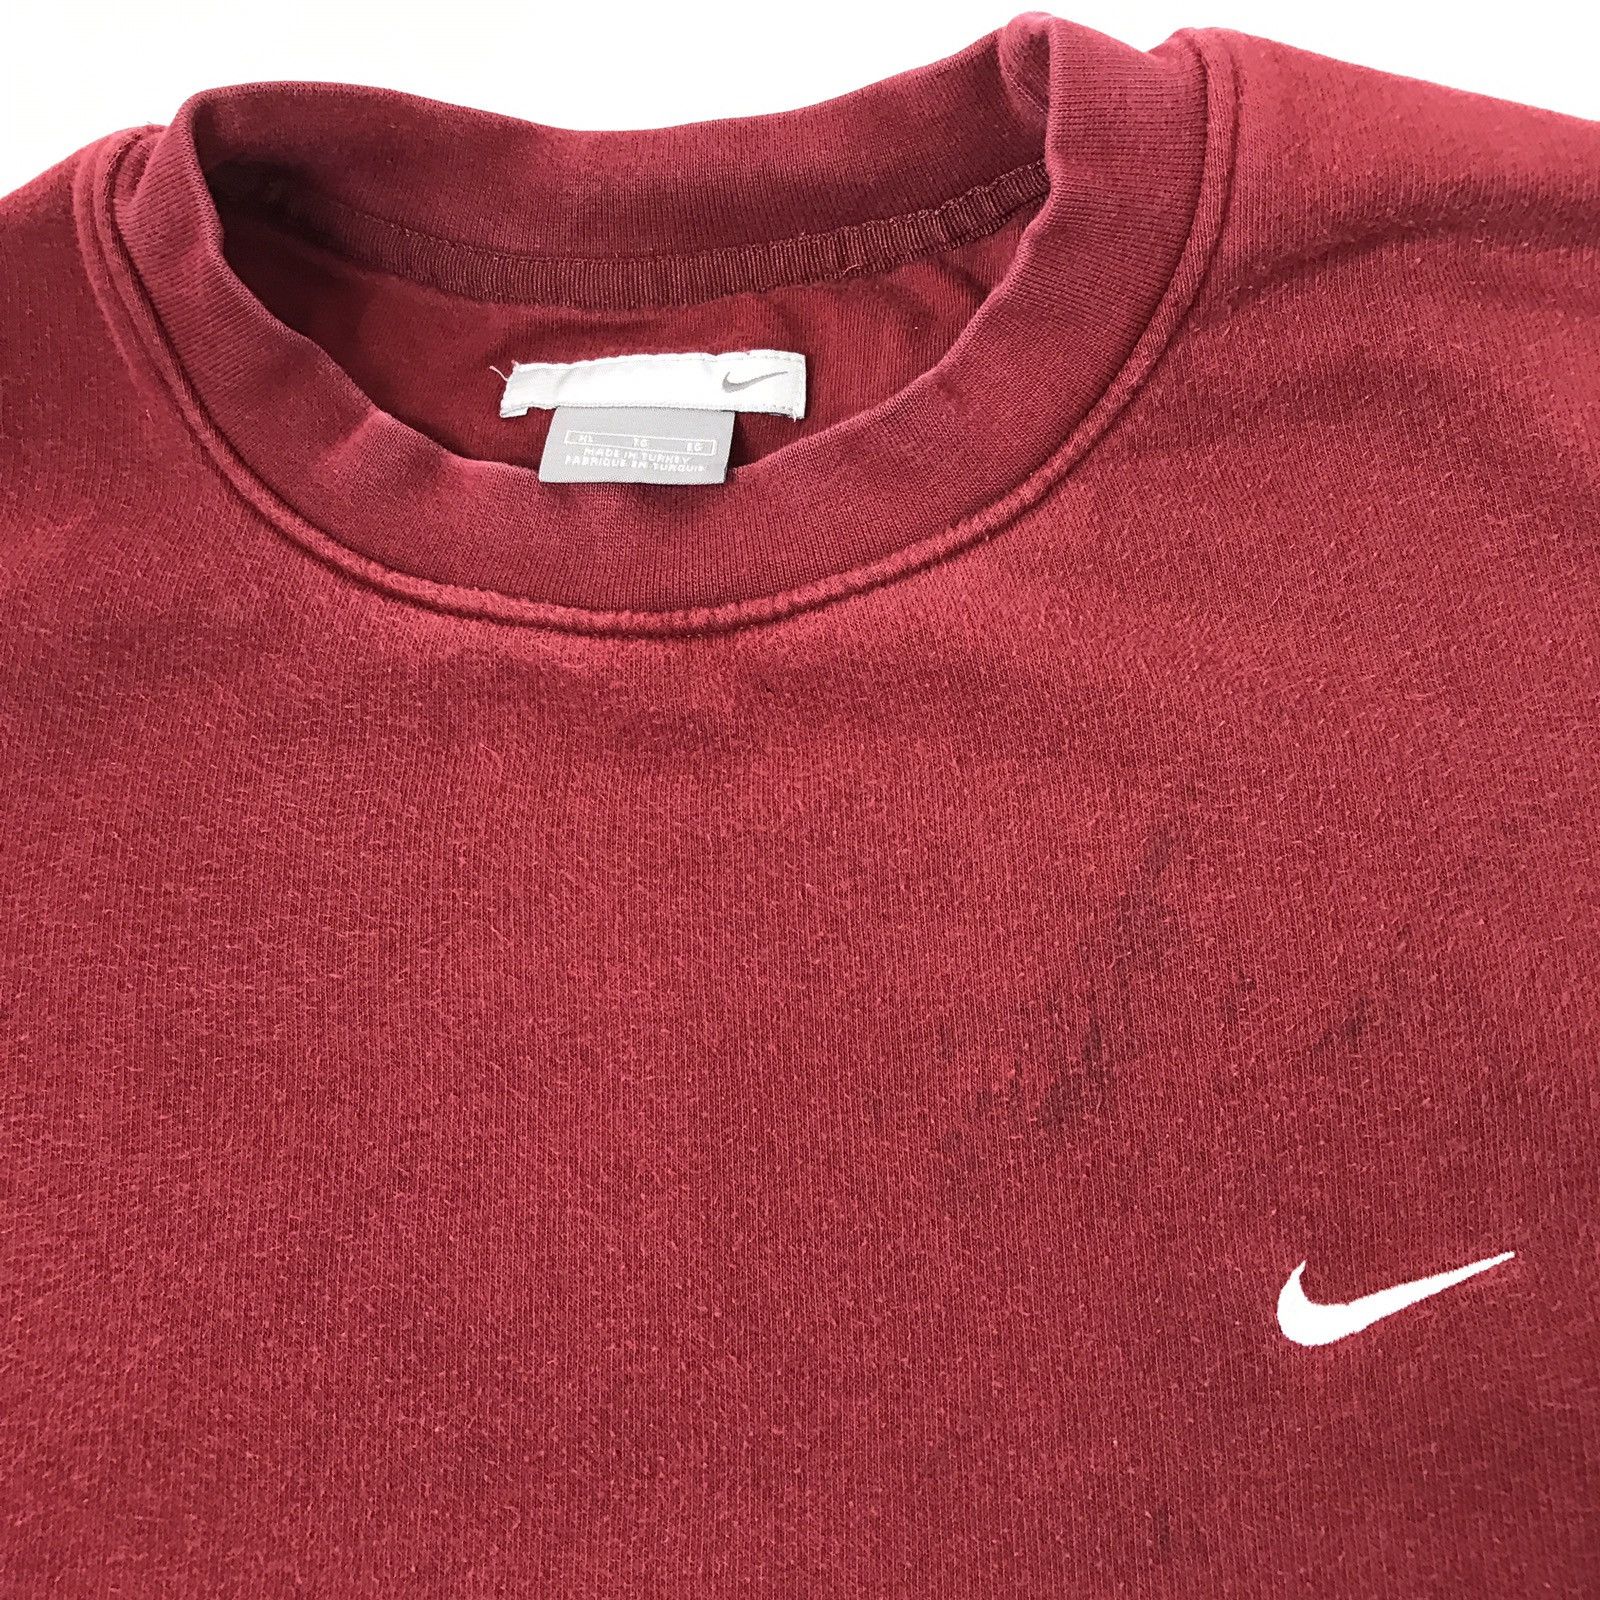 Nike Nike maroon embroidered crewneck sweatshirt Size US XL / EU 56 / 4 - 4 Preview